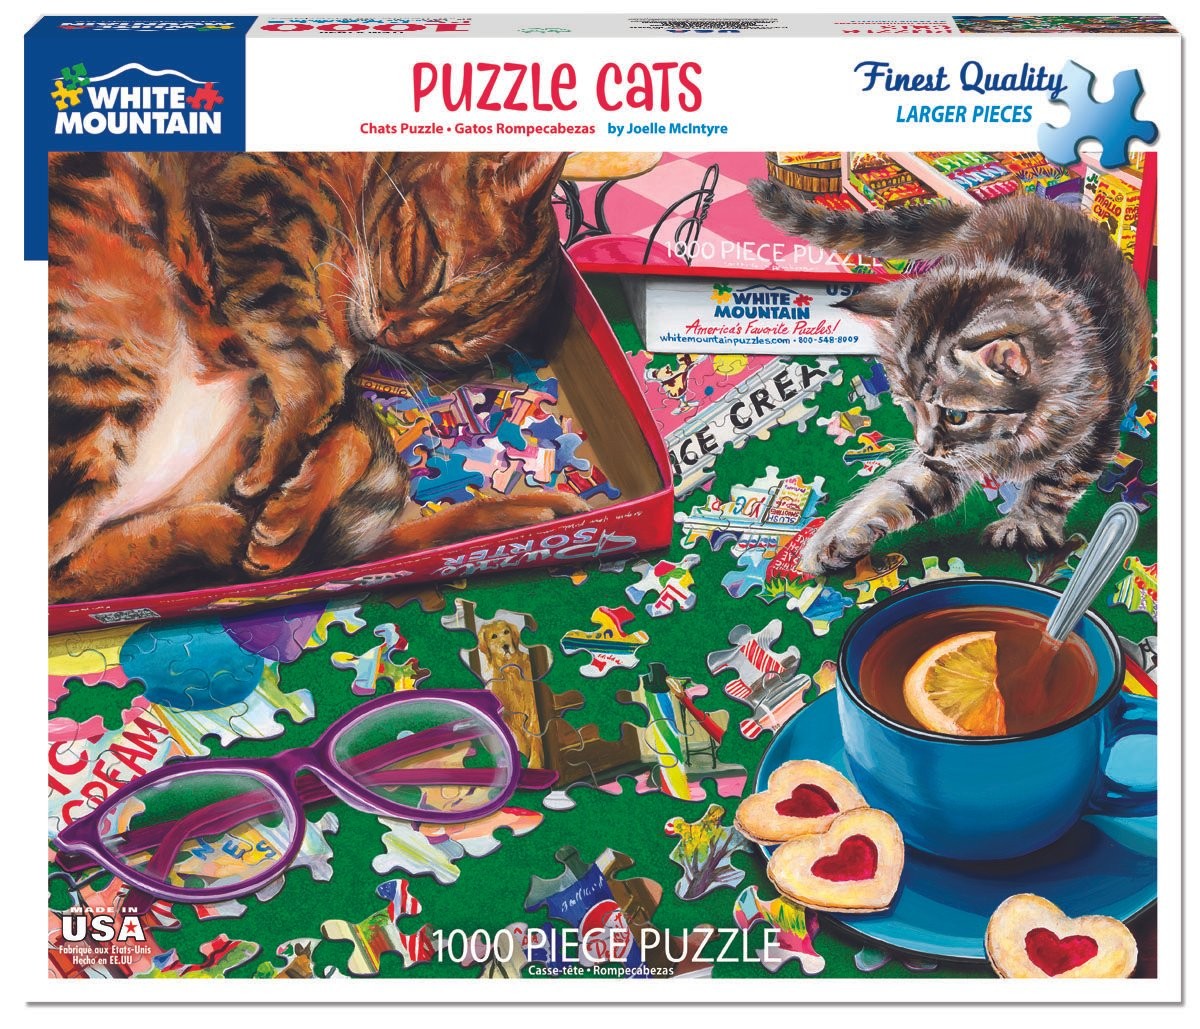 Puzzle Cats 1000 Piece Jigsaw Puzzle